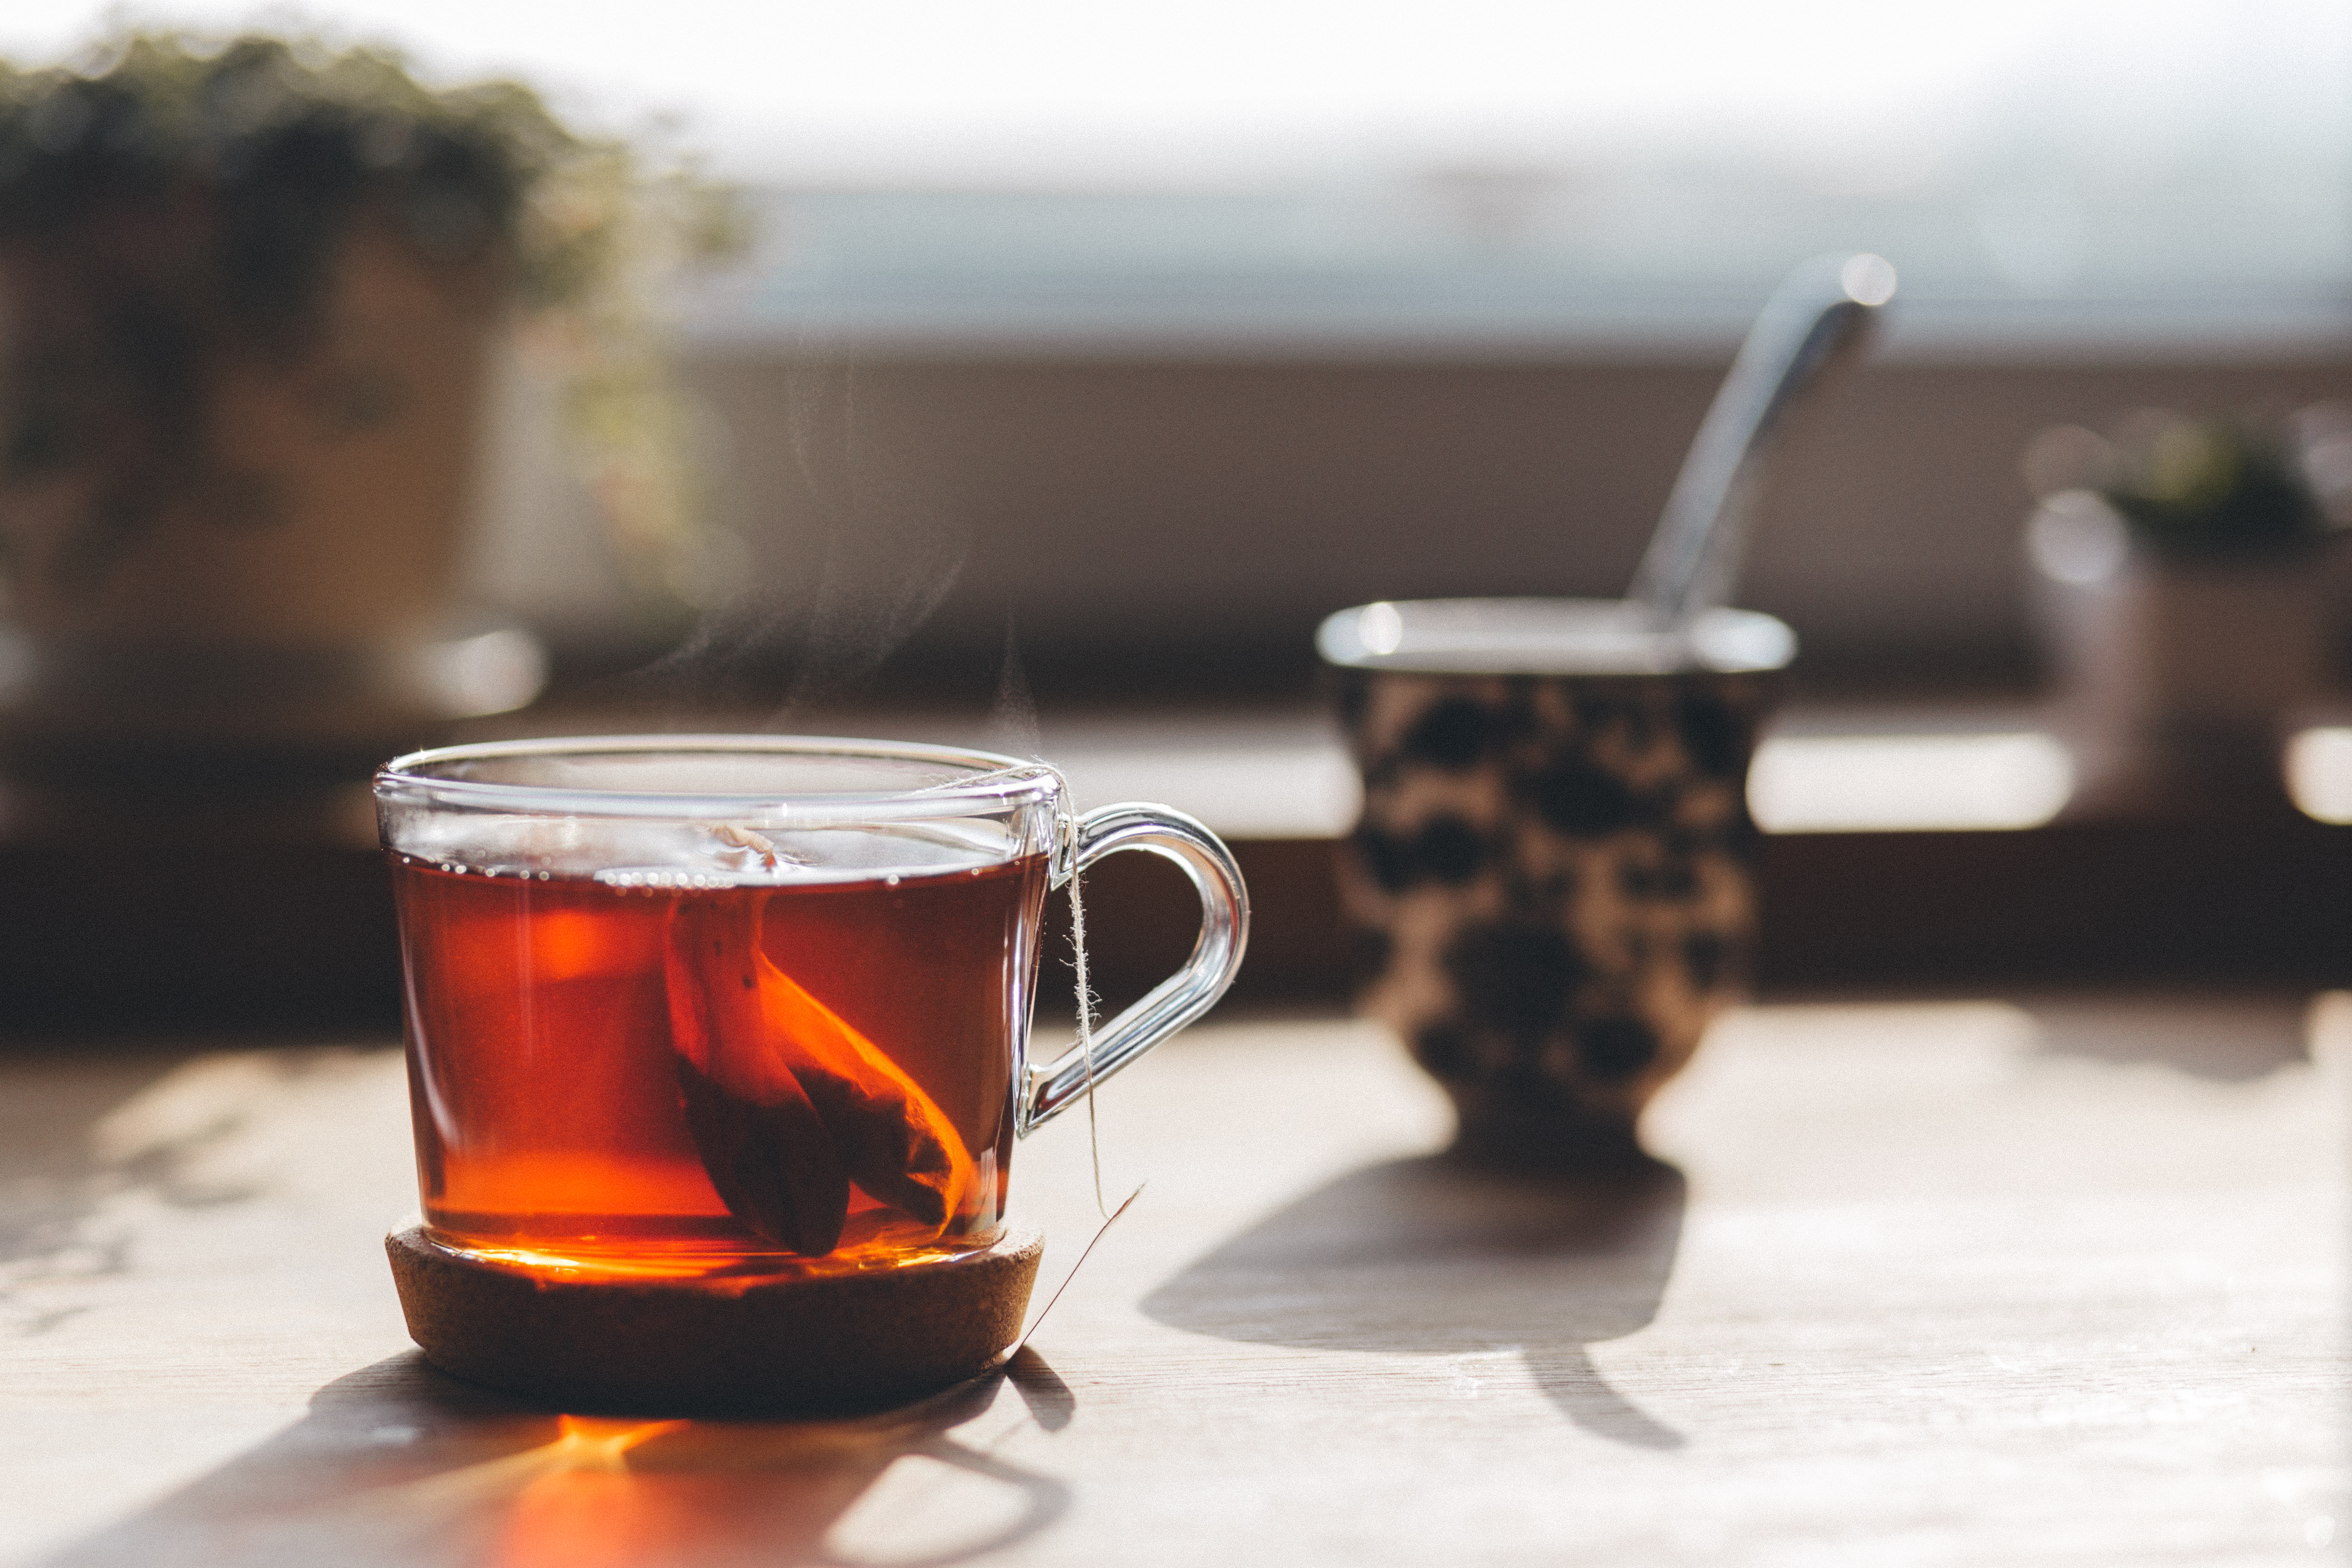 Tea steeping in a clear mug on a table.